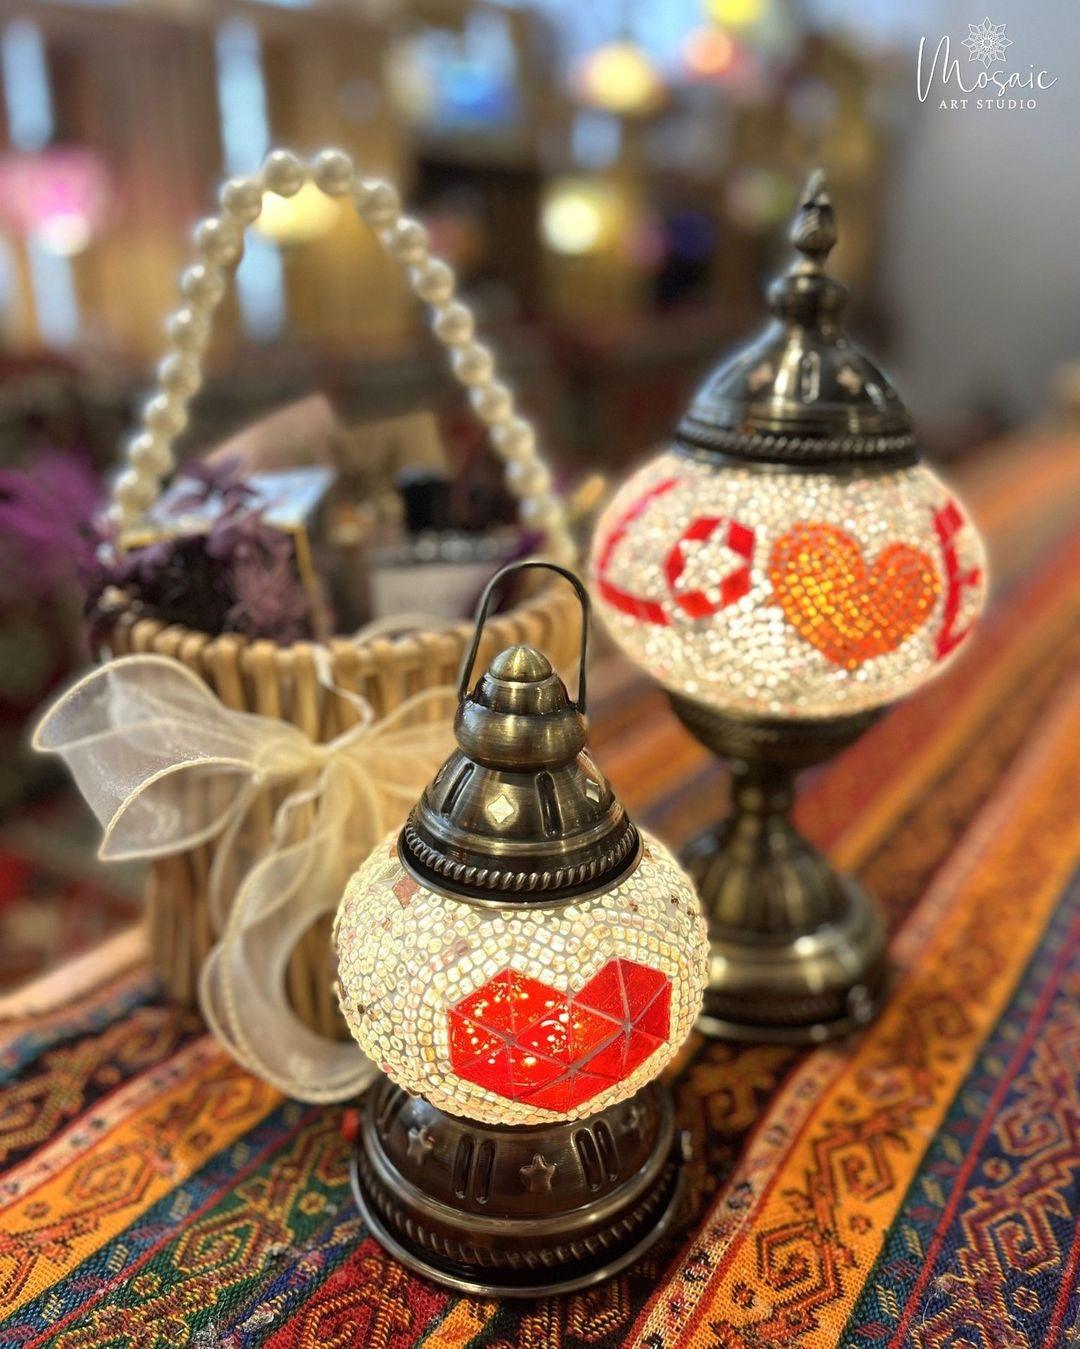 The Most Beautiful Turkish Mosaic Lamp for Valentine's Day - Mosaic Art Studio US